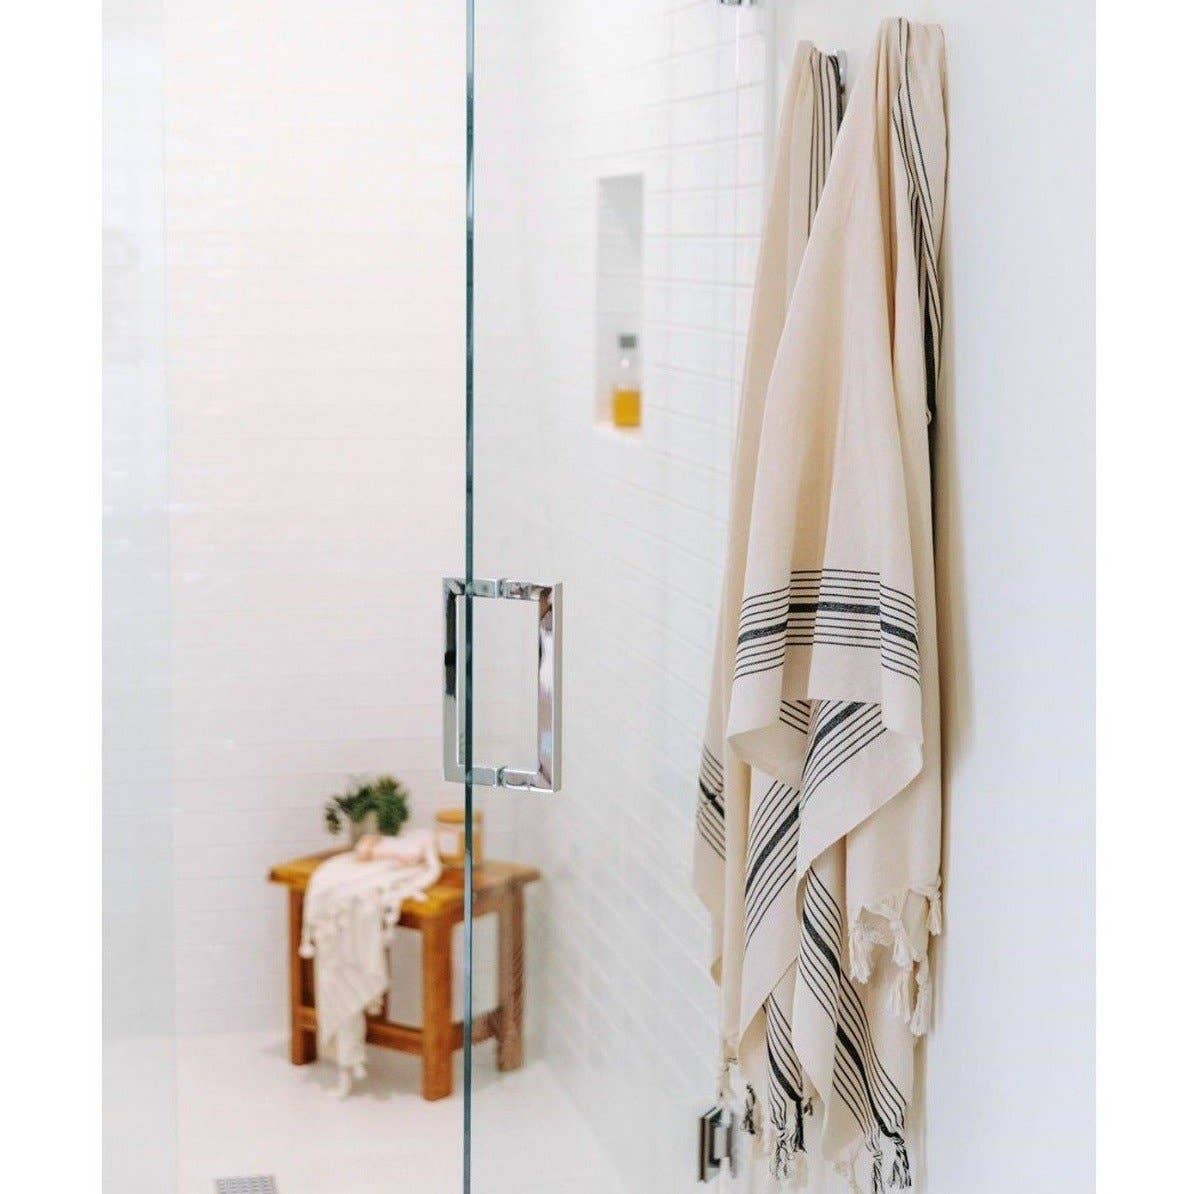 Zebrine 100% Cotton Turkish Hand Towel - Whimsical Details